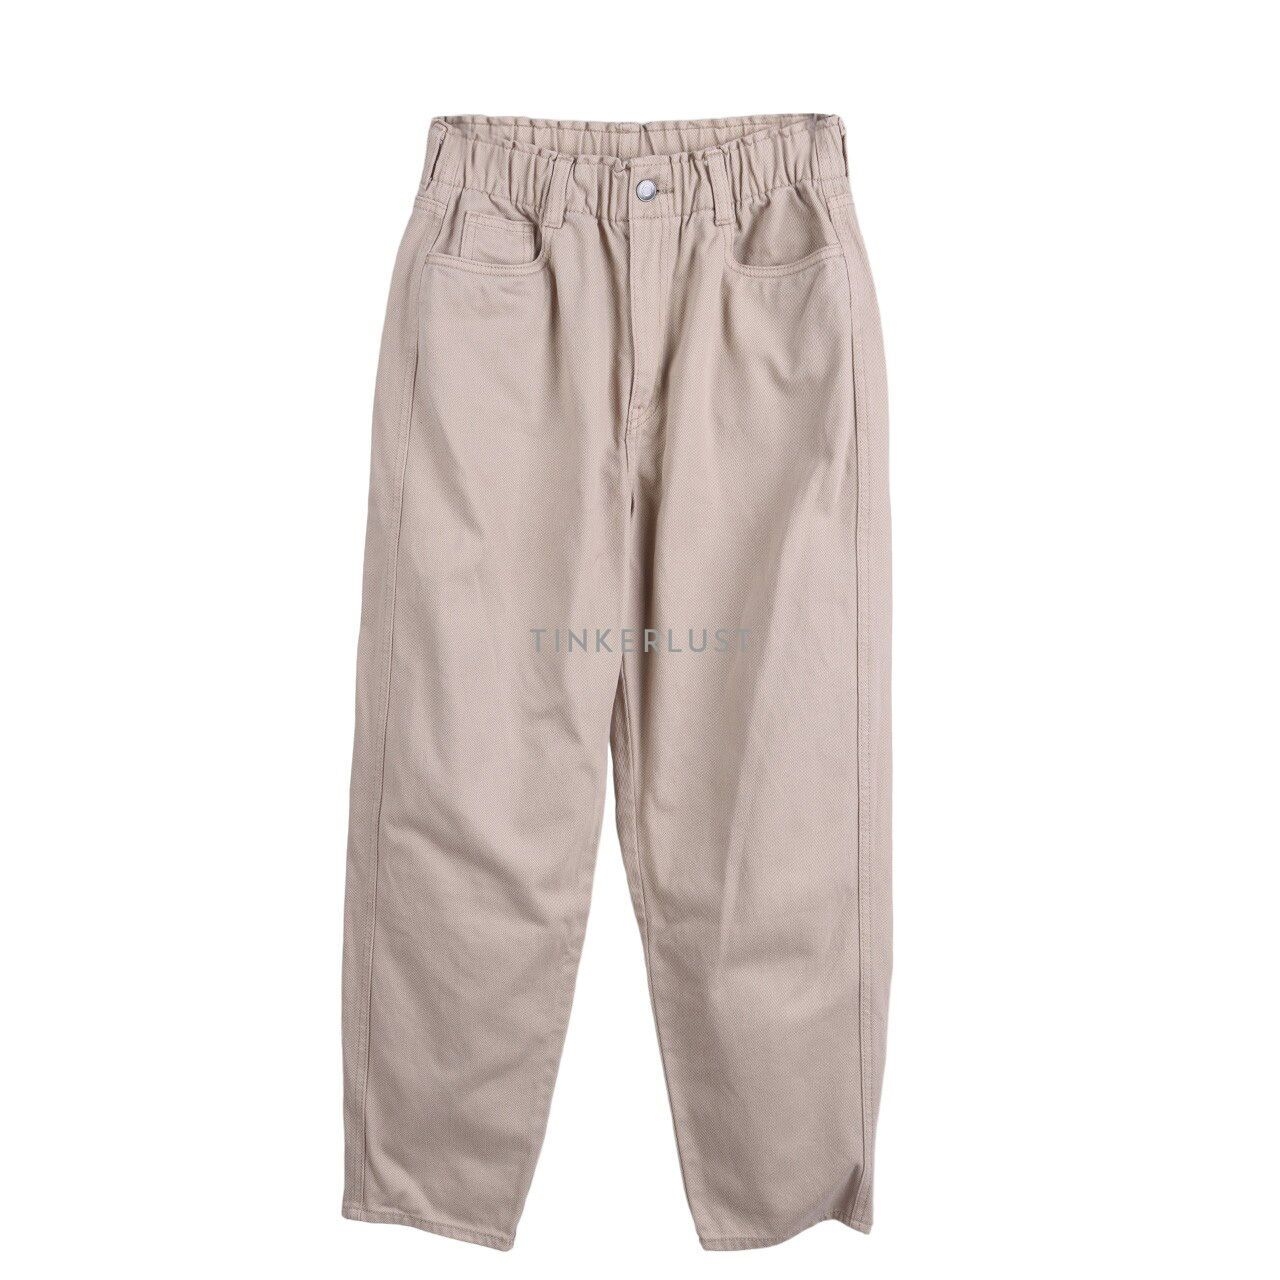 H&M Light Brown Long Pants